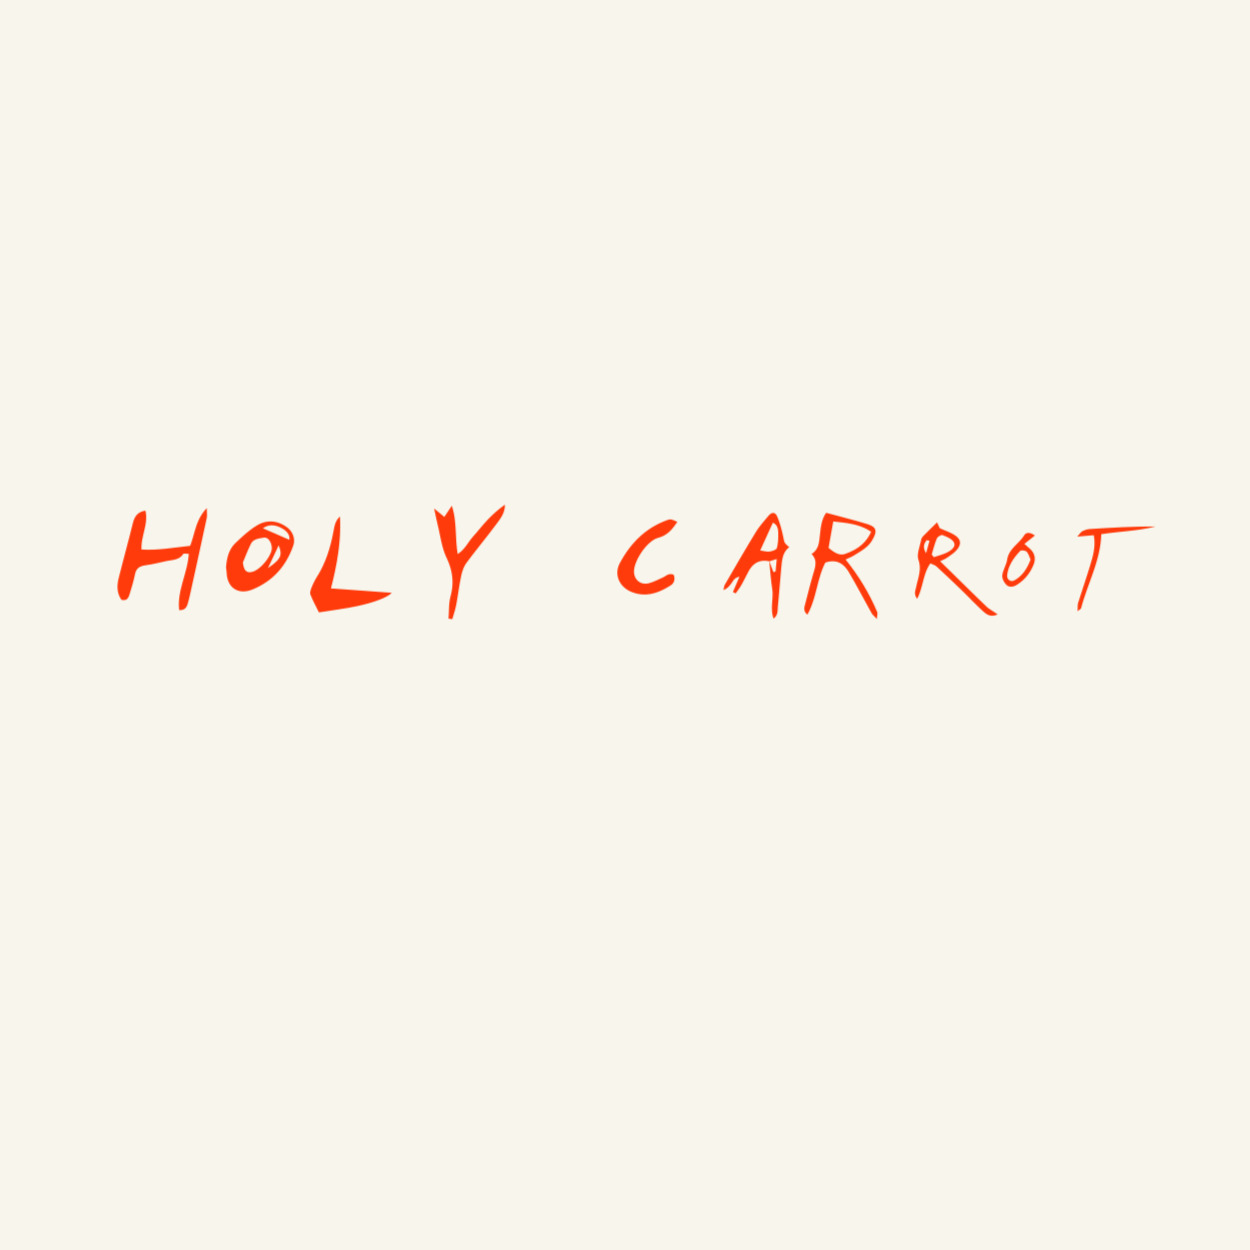 Holy Carrot